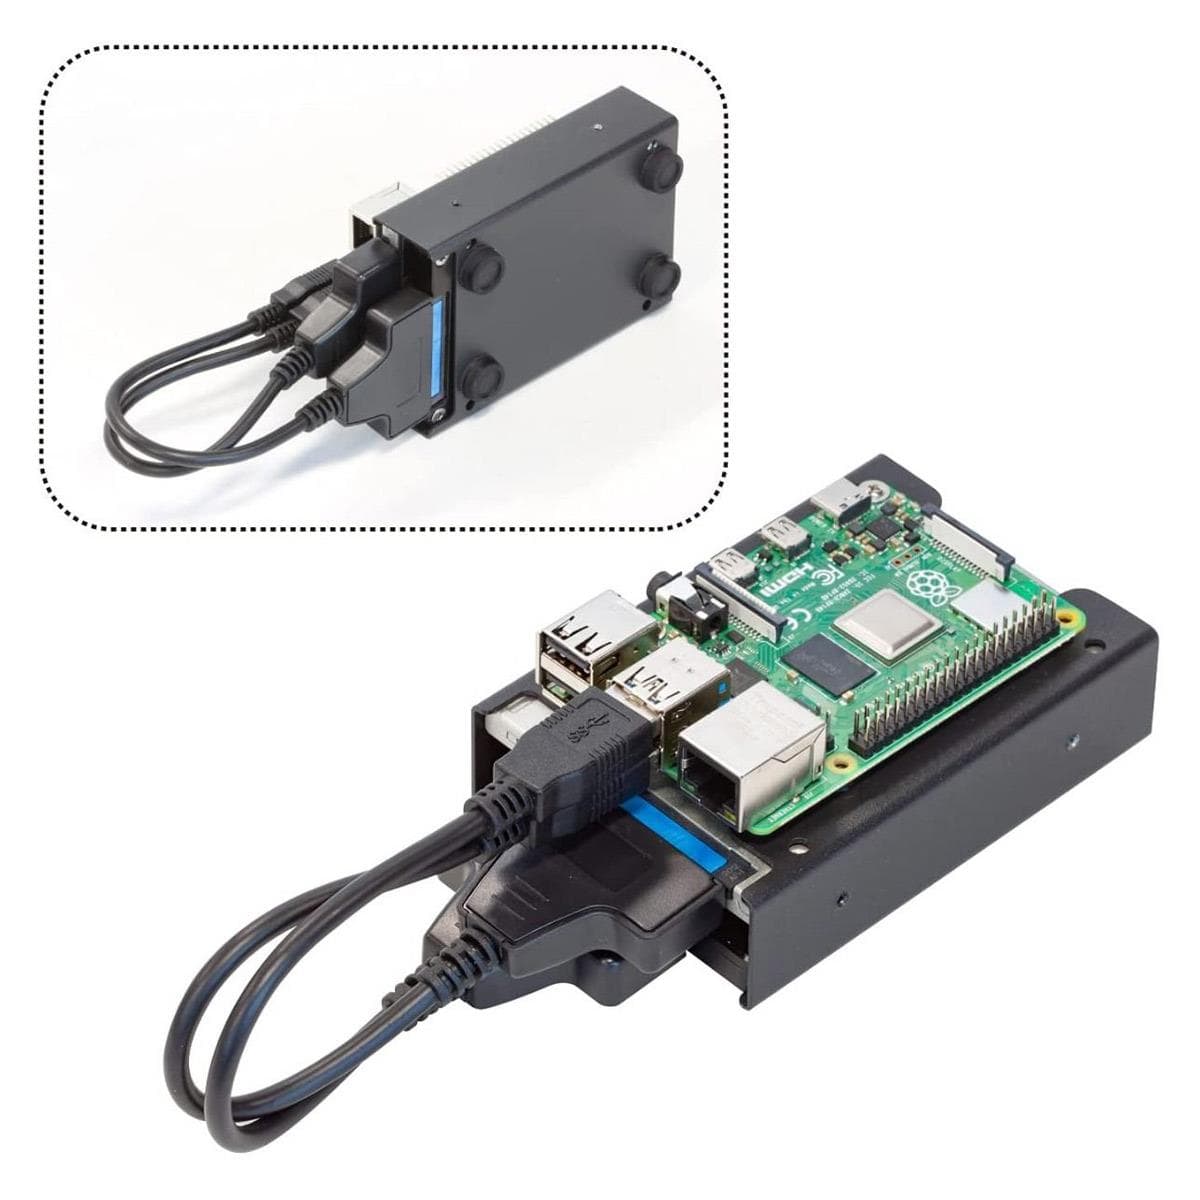 NAS Bracket for Raspberry Pi and 2.5" SSDs - The Pi Hut